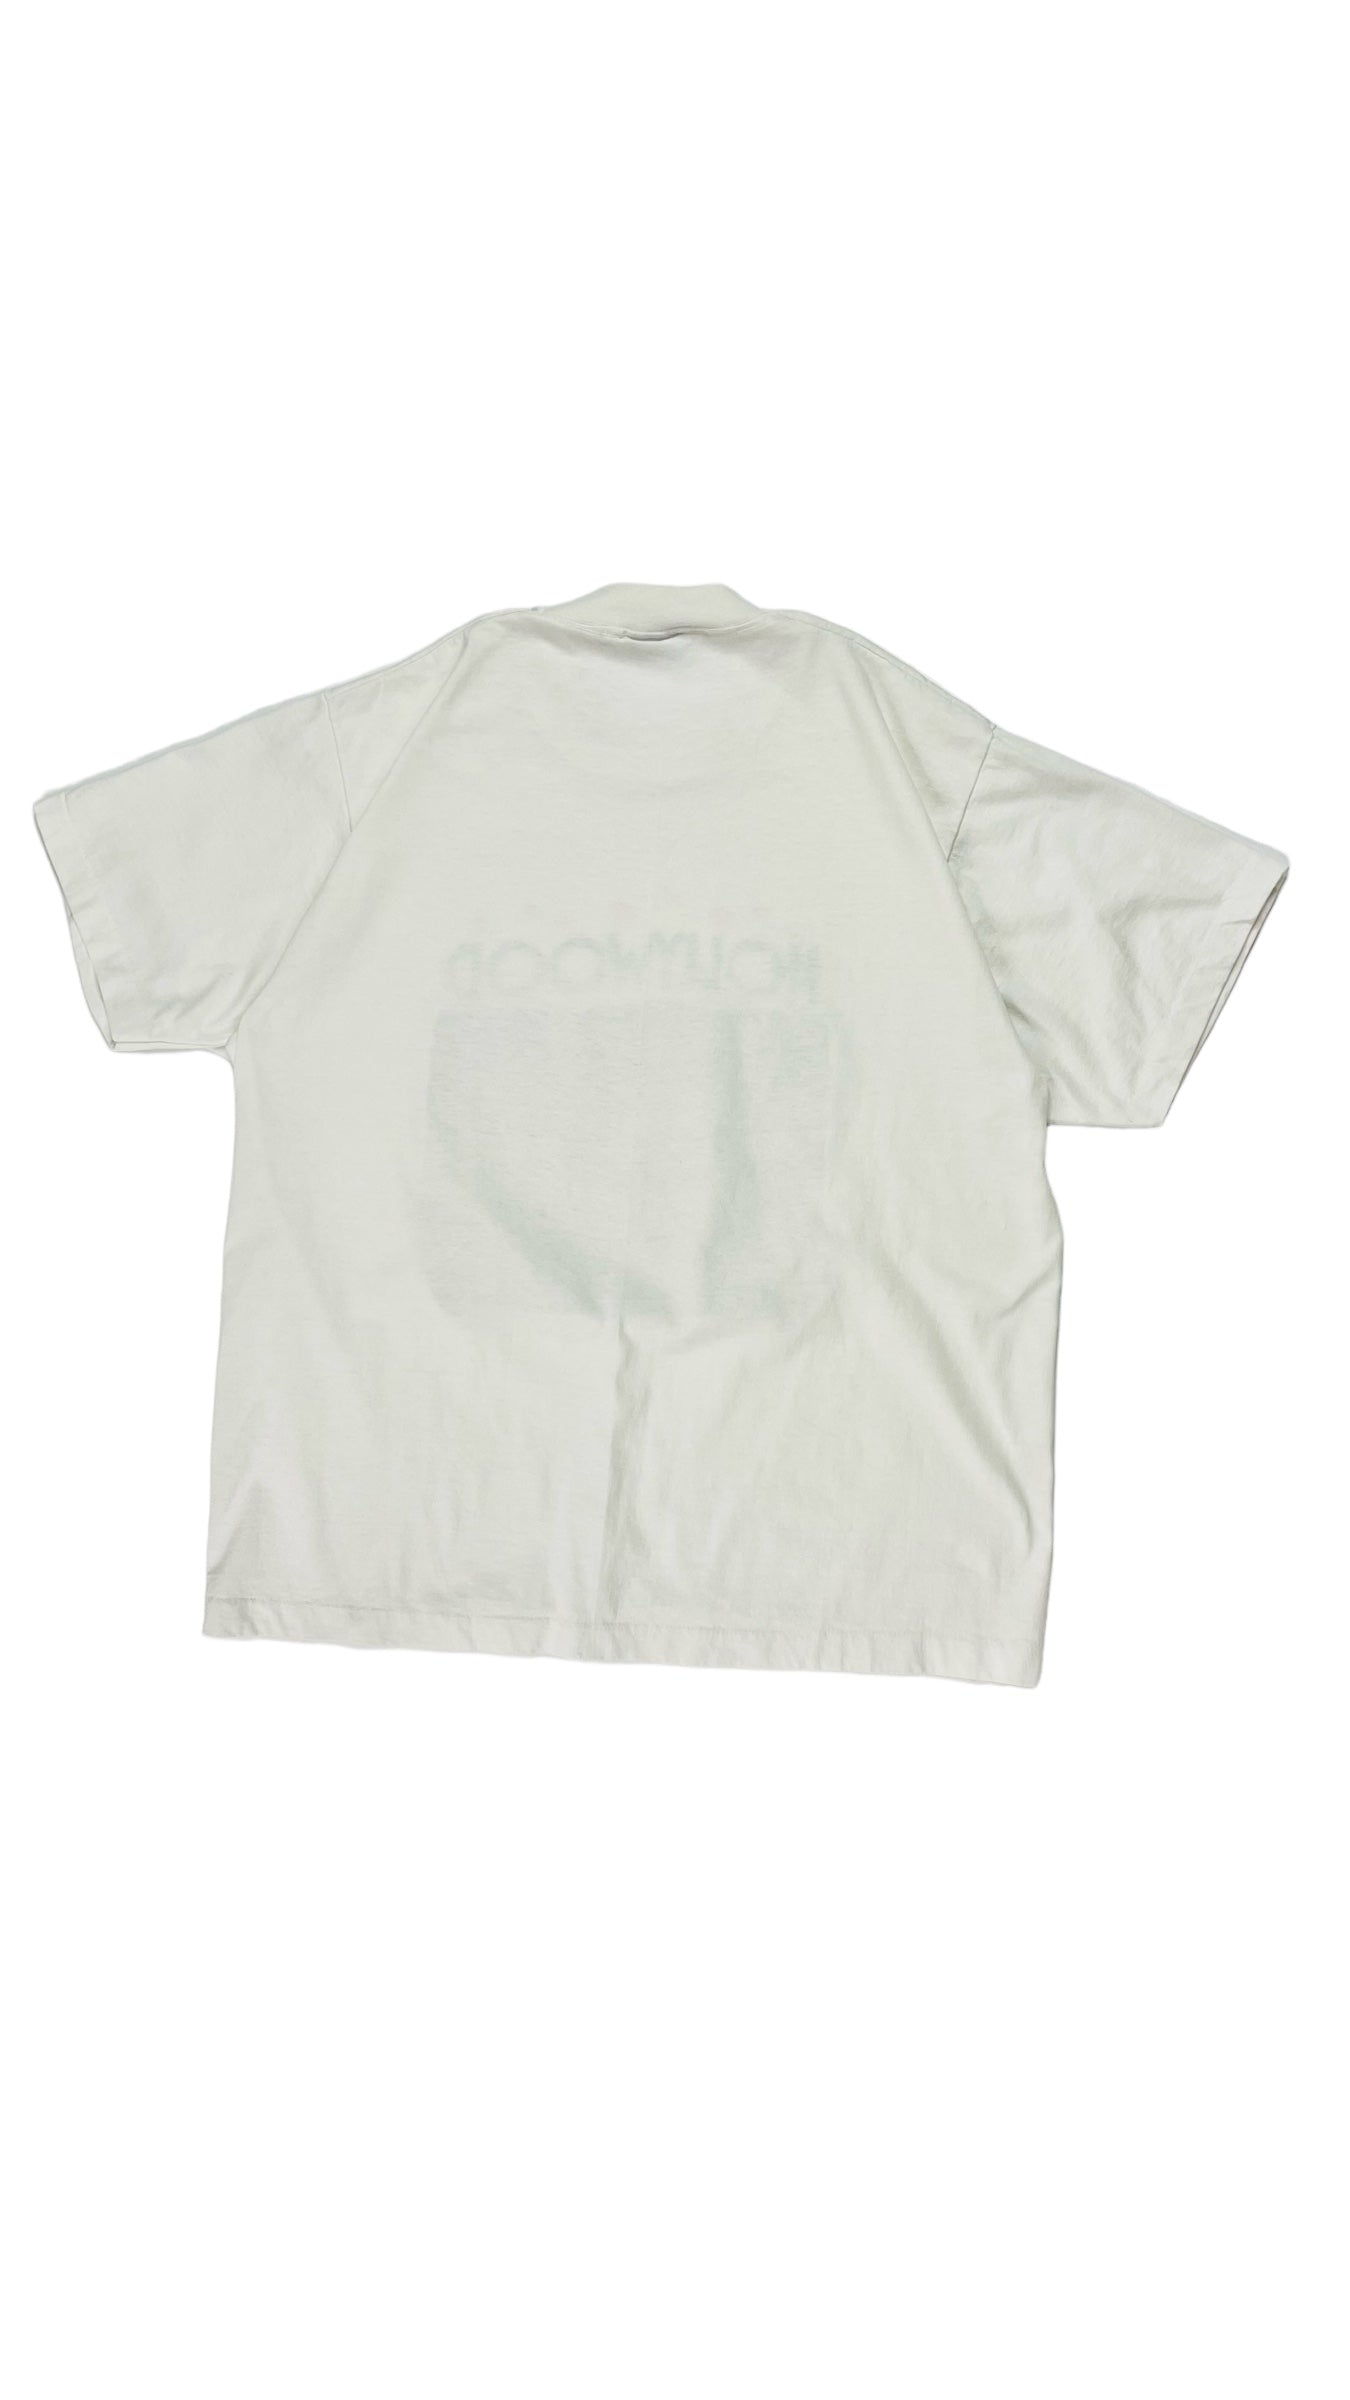 Vintage 90s white Hollywood souvenier t shirt - Size XL